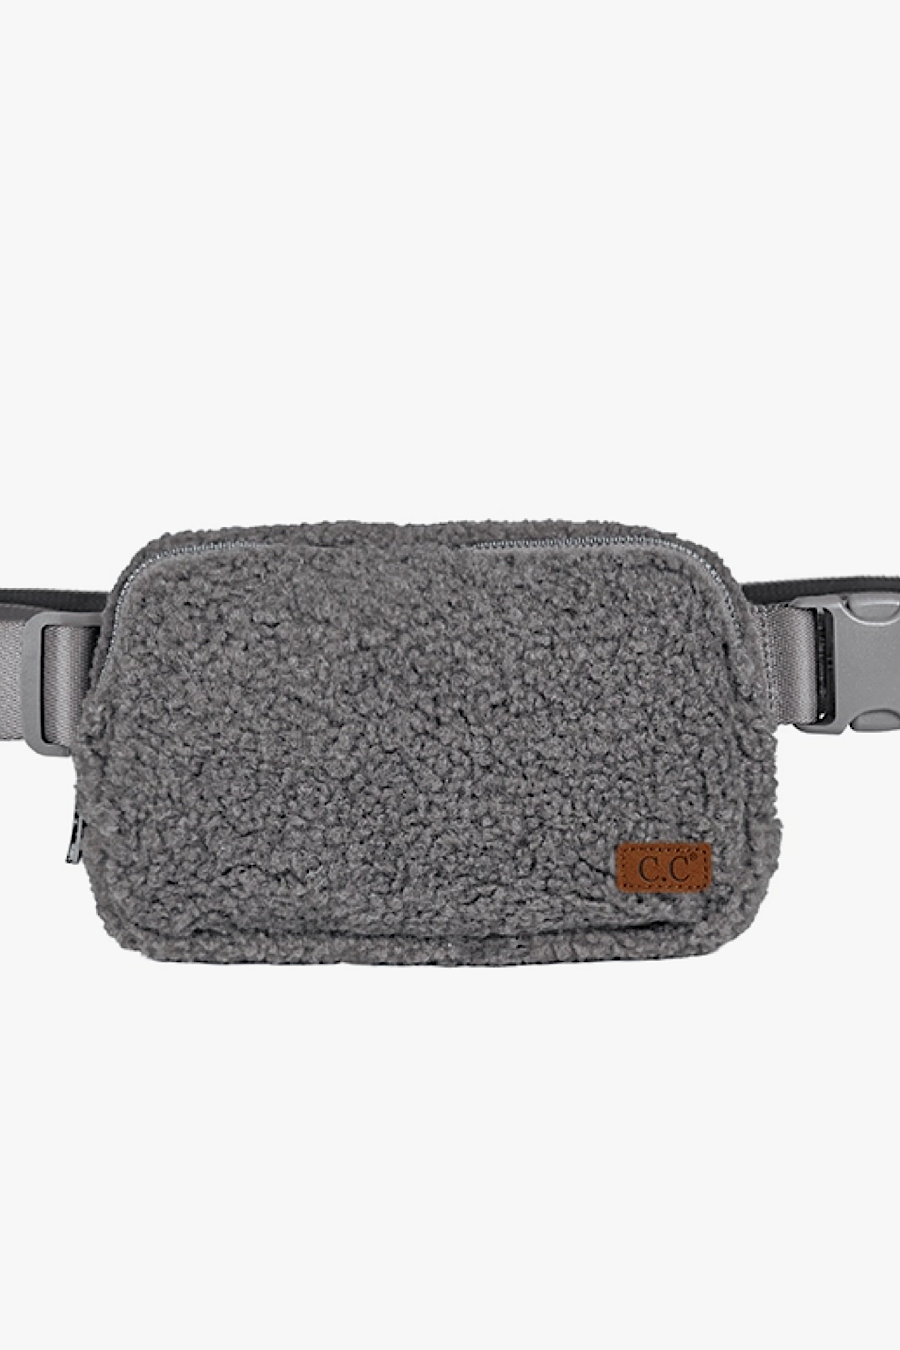 C.C. Sherpa Fannie Pack Belt Bag in Taupe, Grey or Black